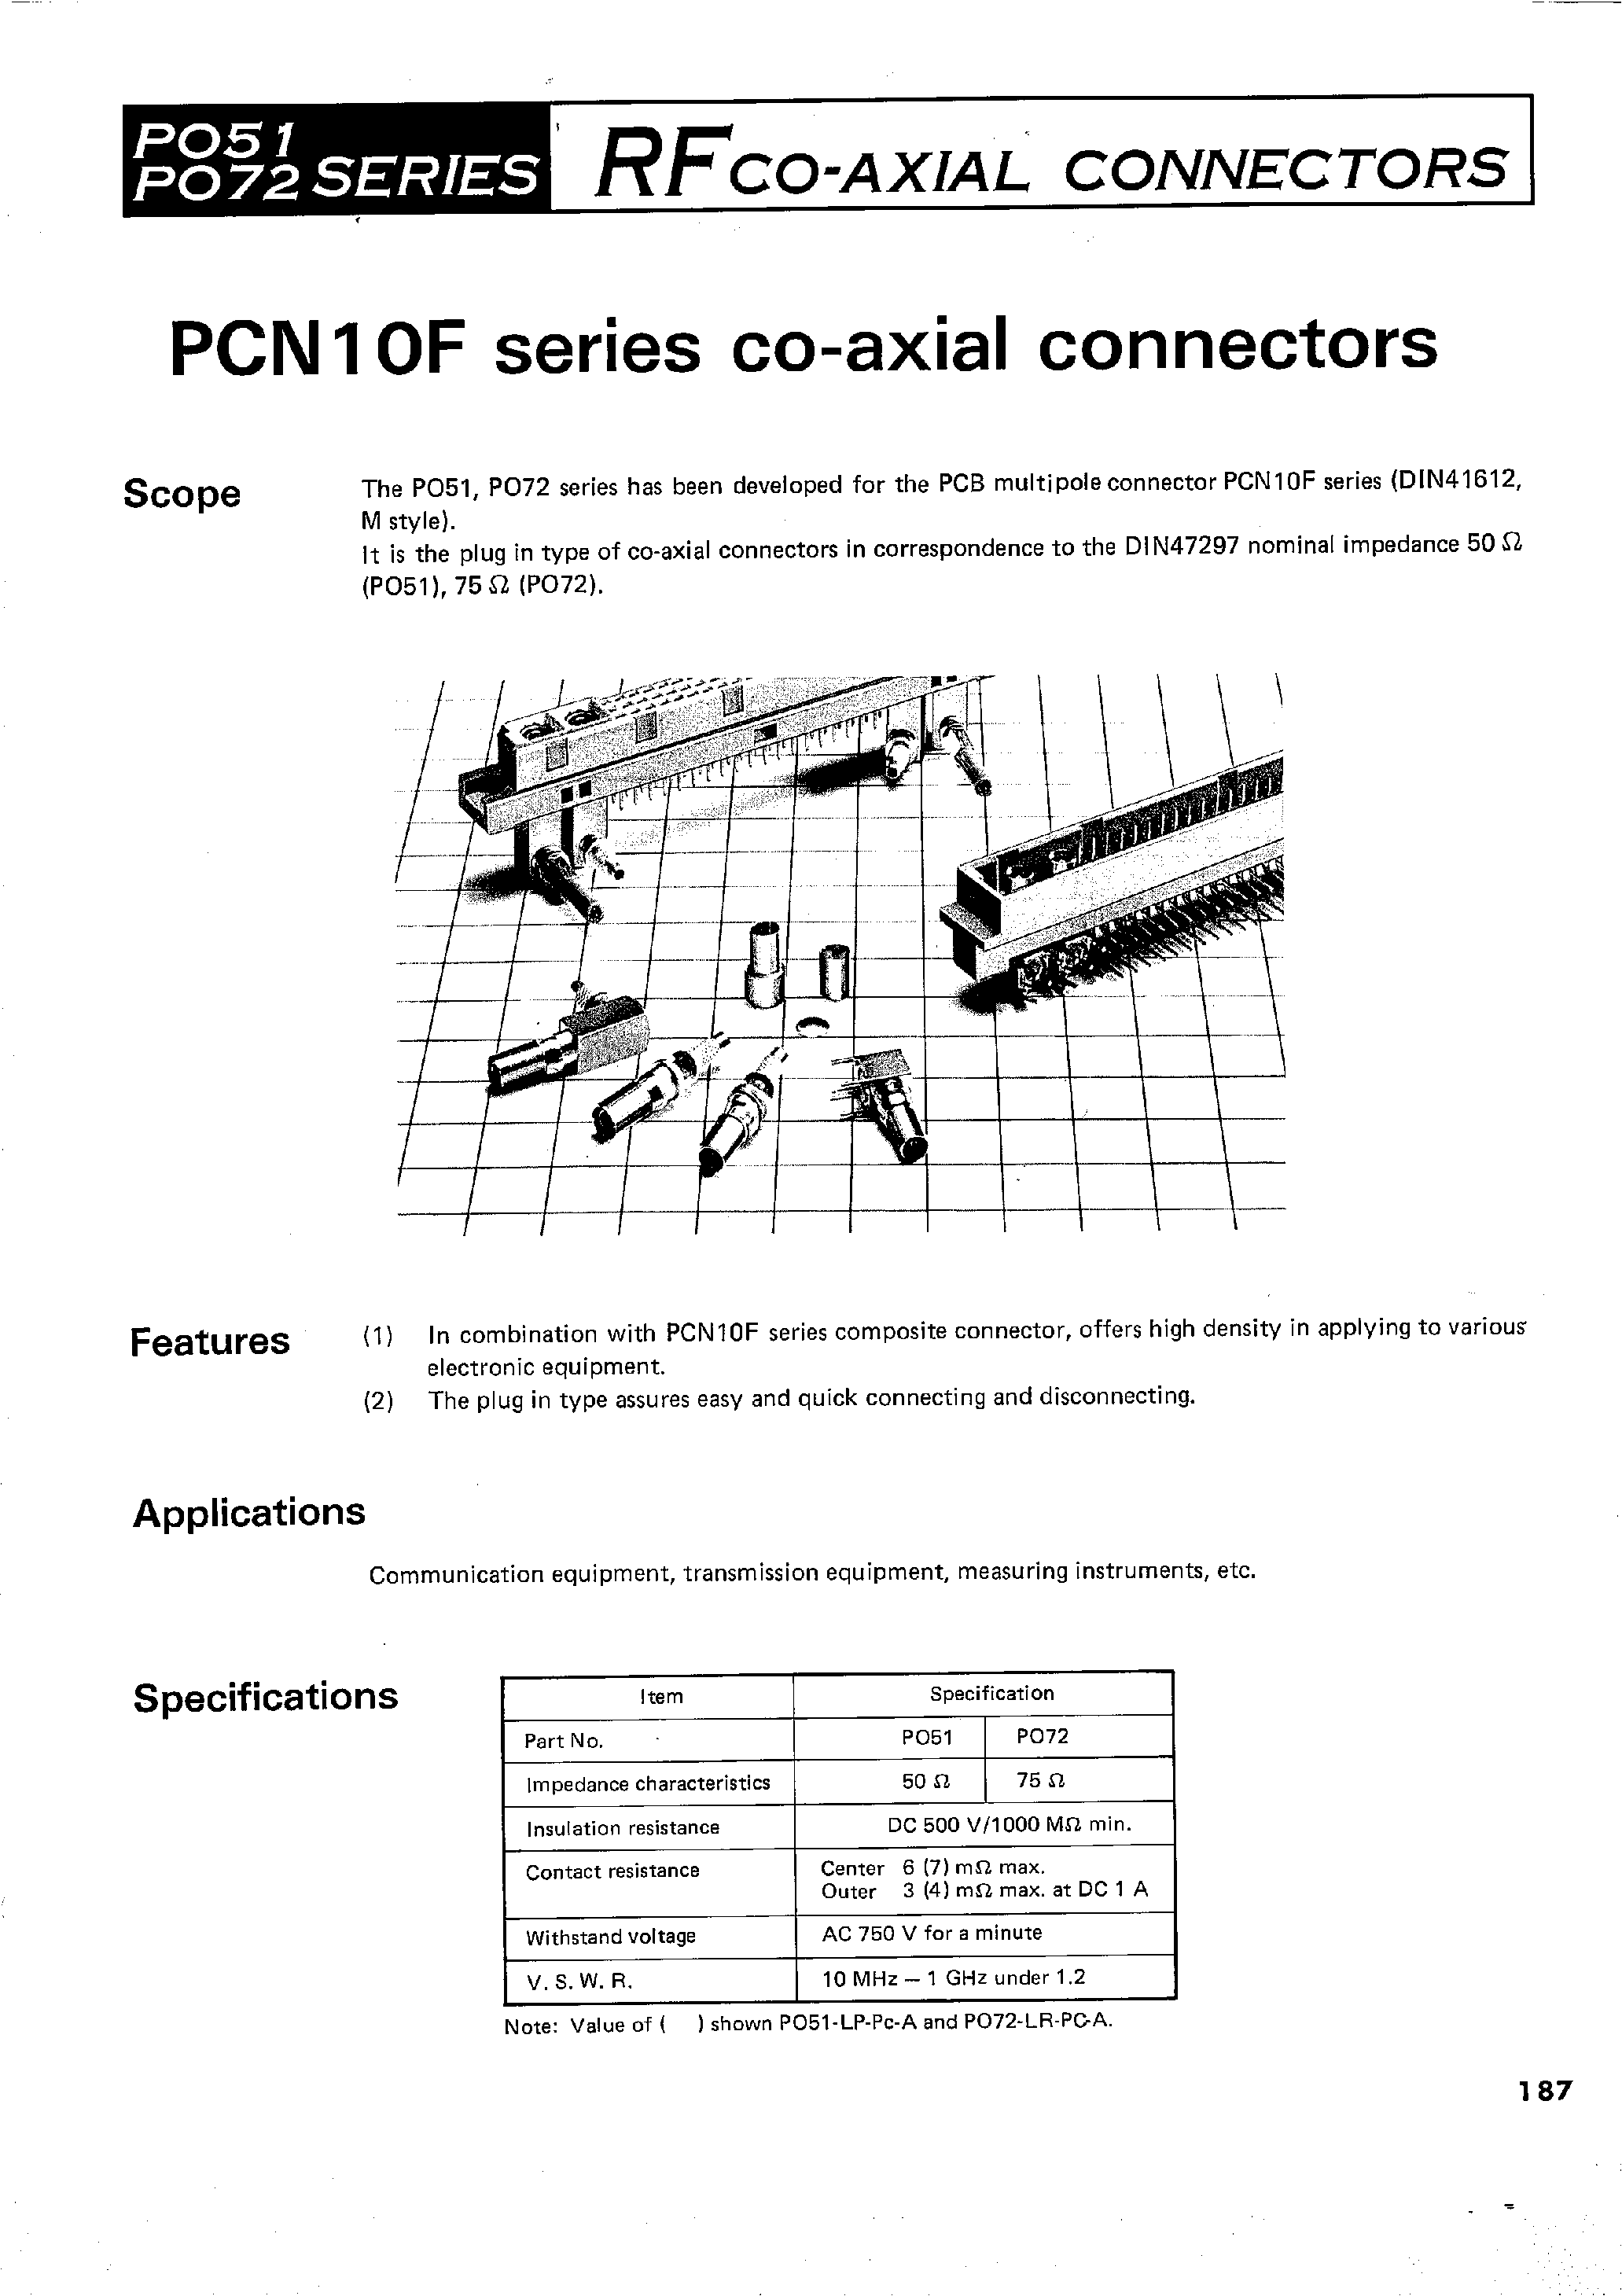 Datasheet PO51-J-1.5 - RFCO-AXIAL CONNECTORS page 1